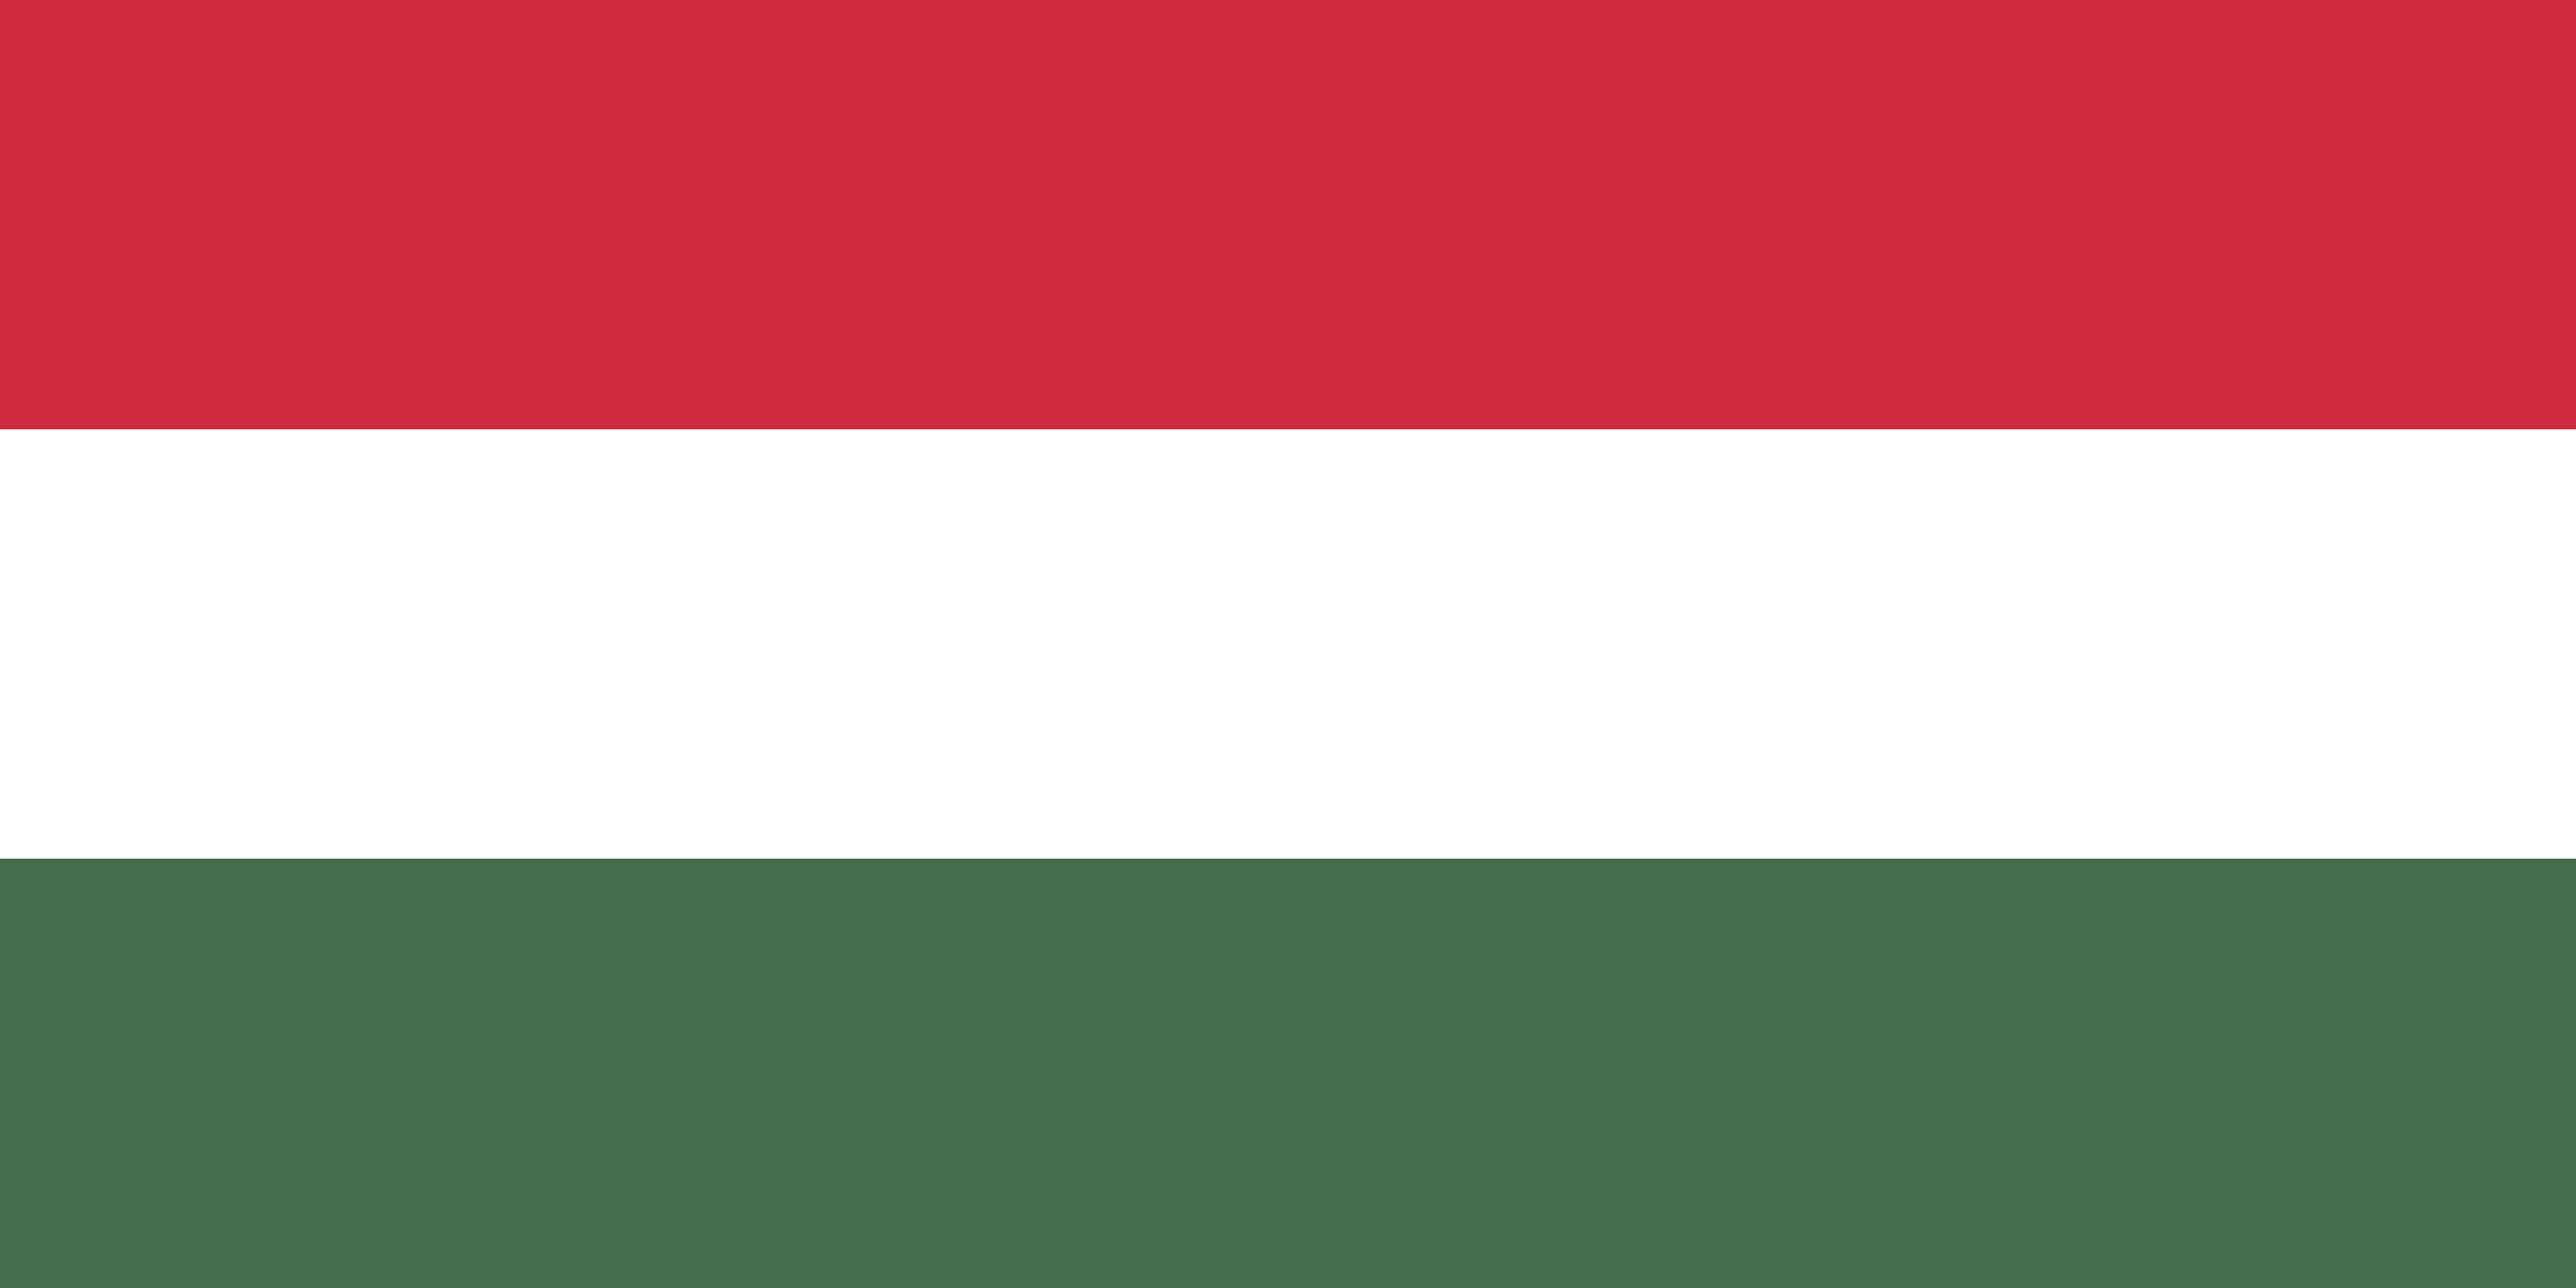 Free Hungary Flag Documents: PDF, DOC, DOCX, HTML & More!